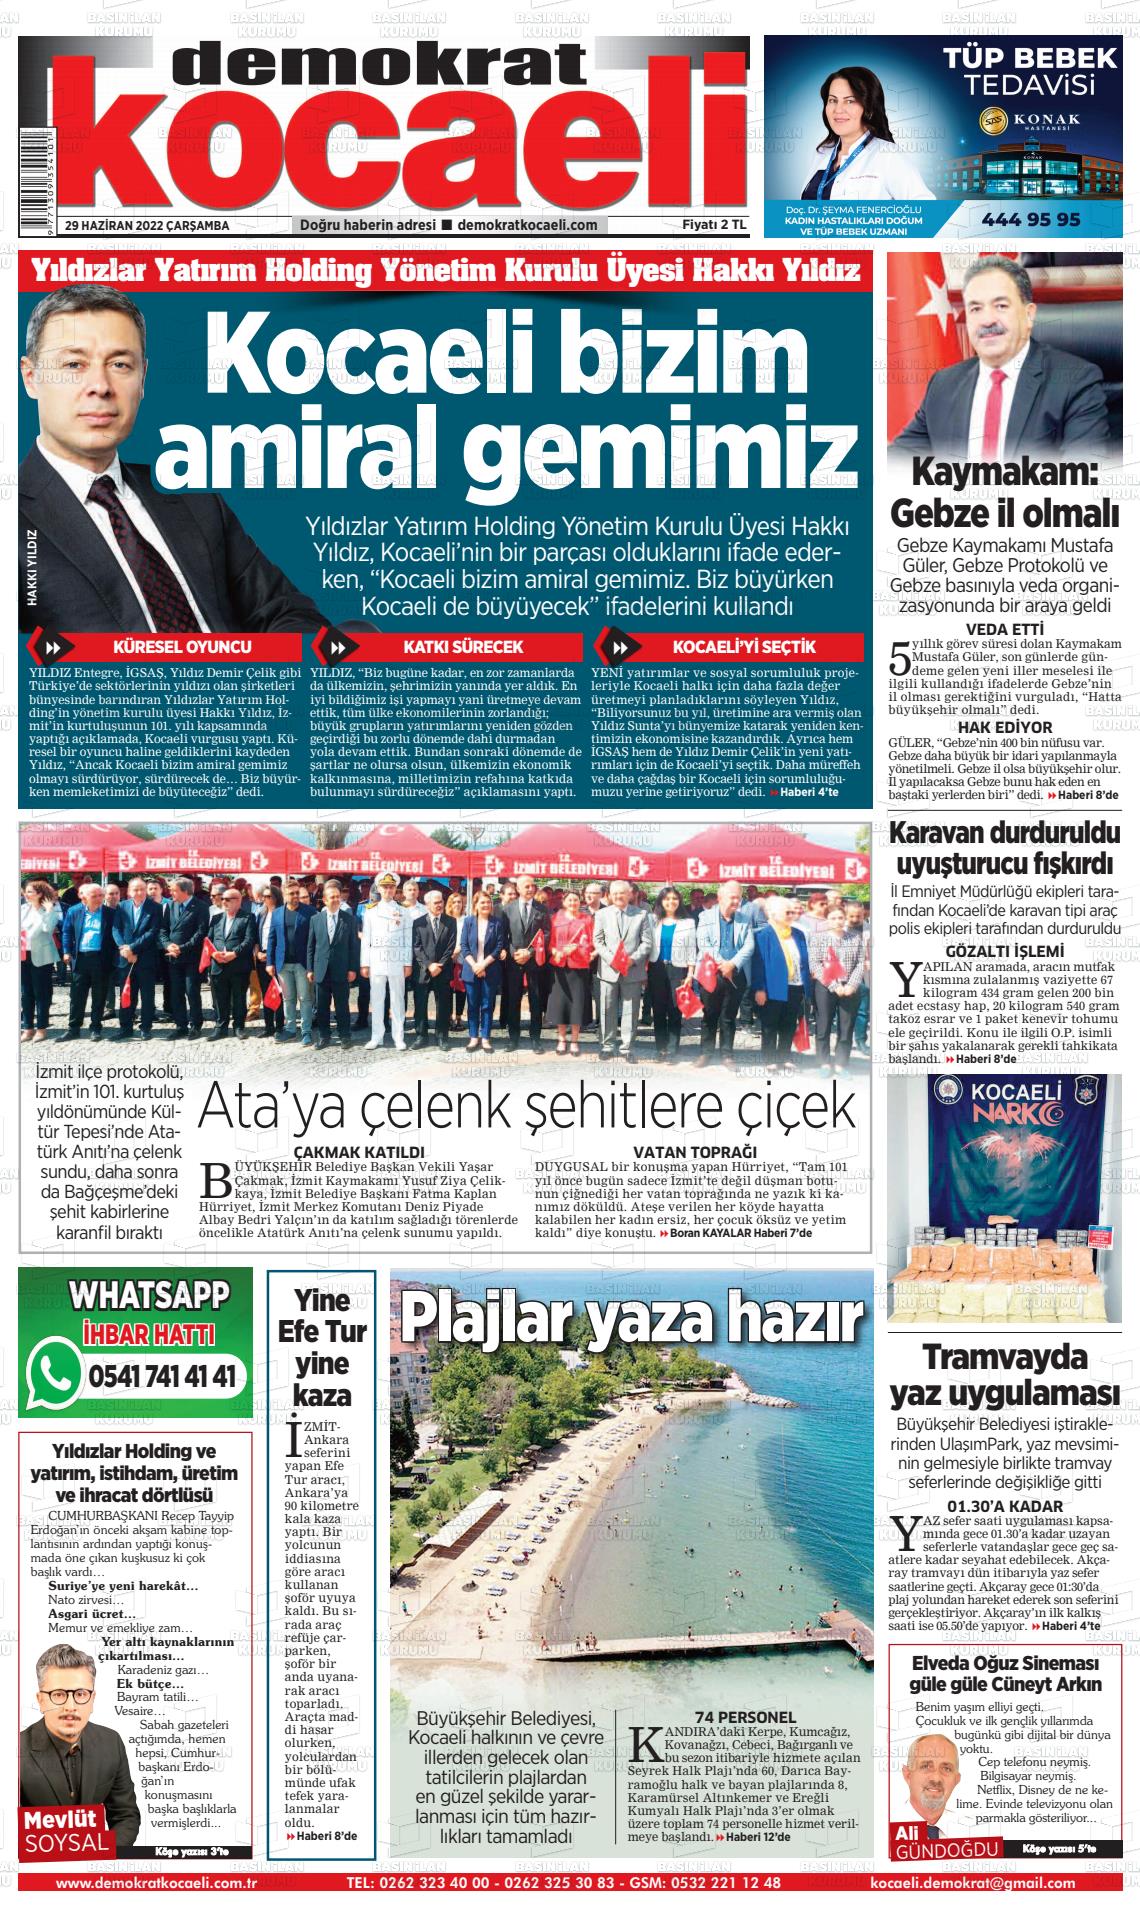 29 Haziran 2022 Demokrat Kocaeli Gazete Manşeti